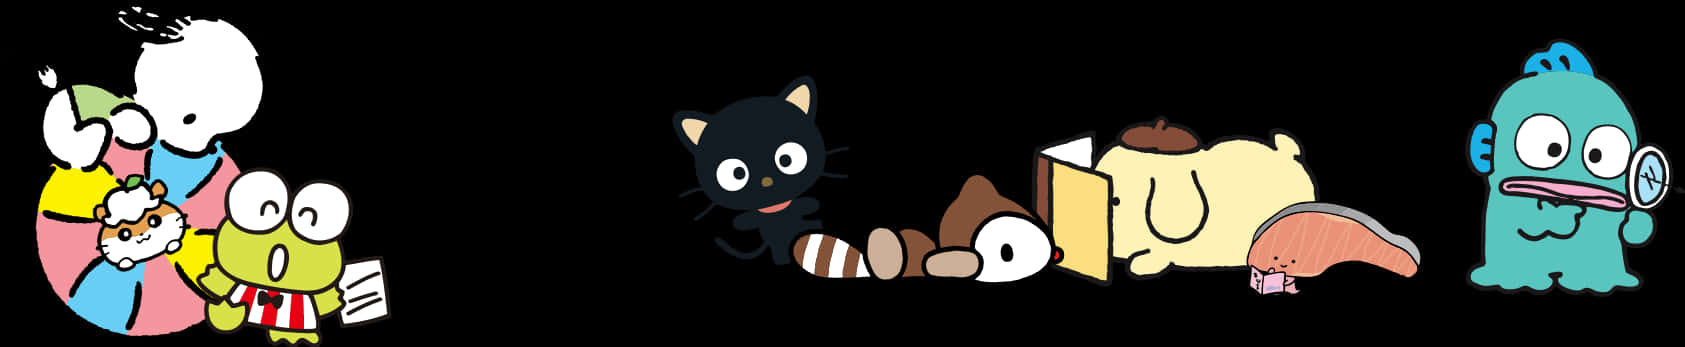 A Cartoon Cat And Raccoon PNG